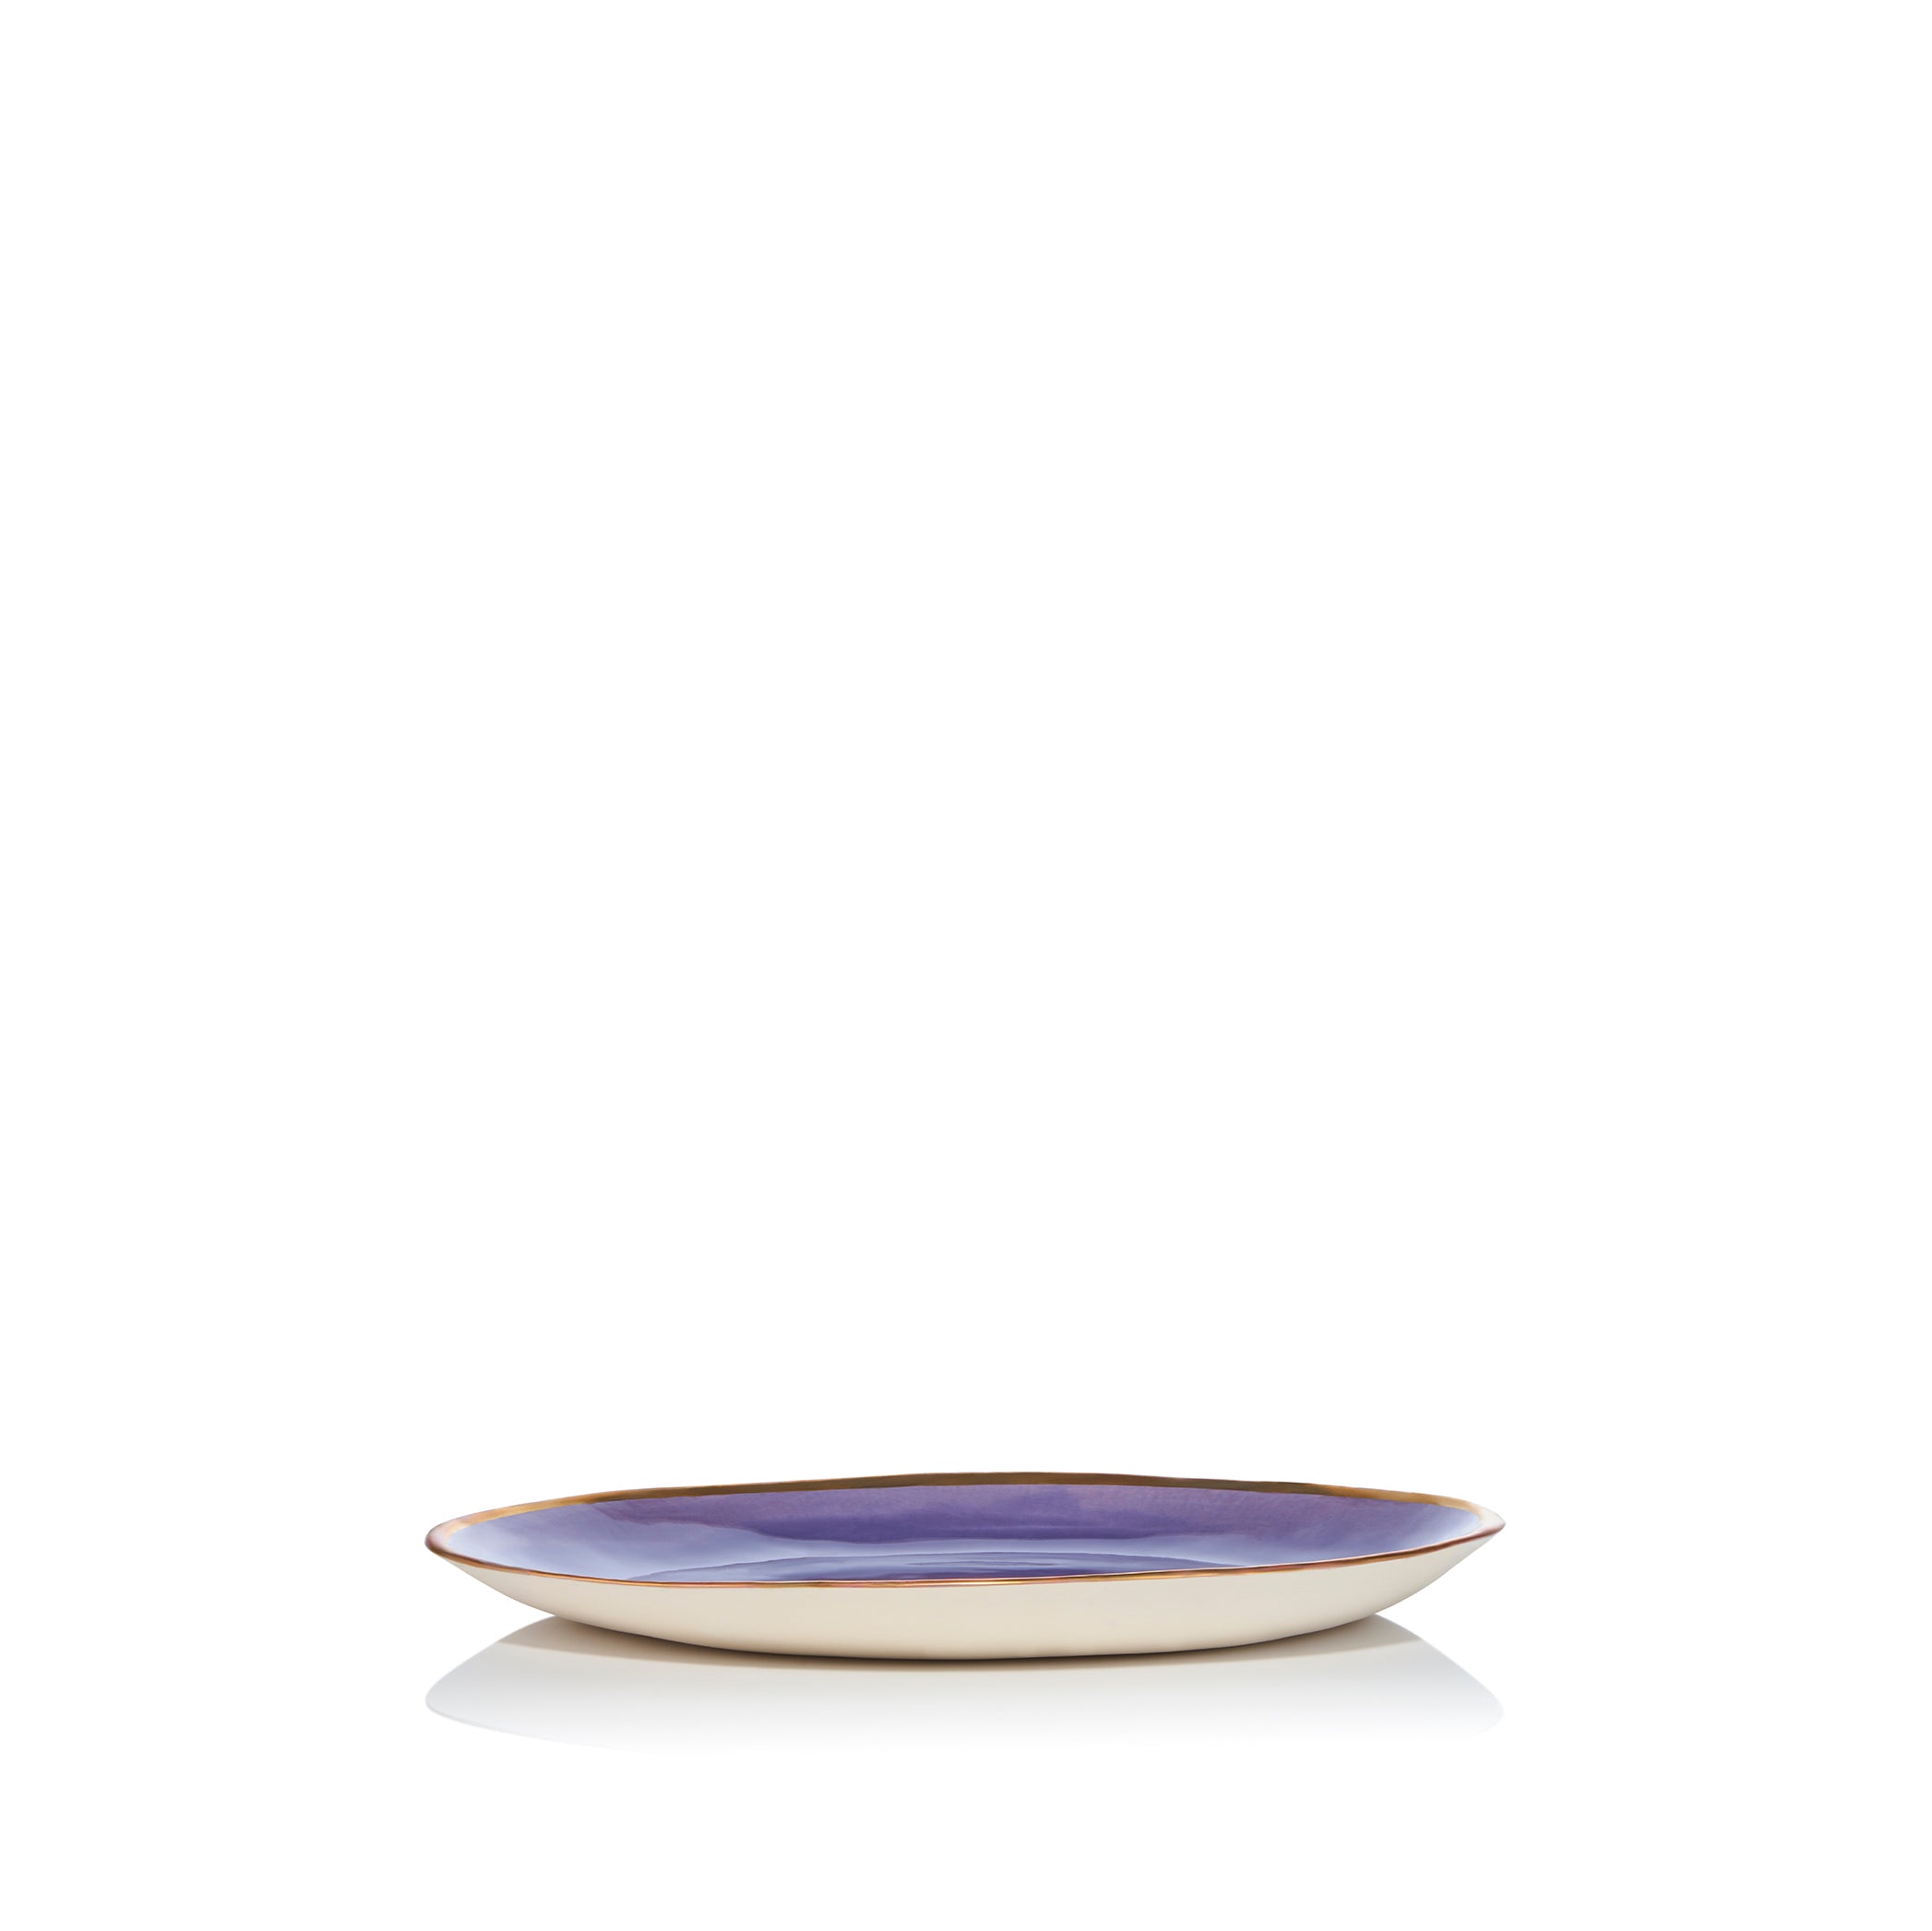 Handmade 27cm Purple Ceramic Dinner Plate with 24 Carat Gold Rim